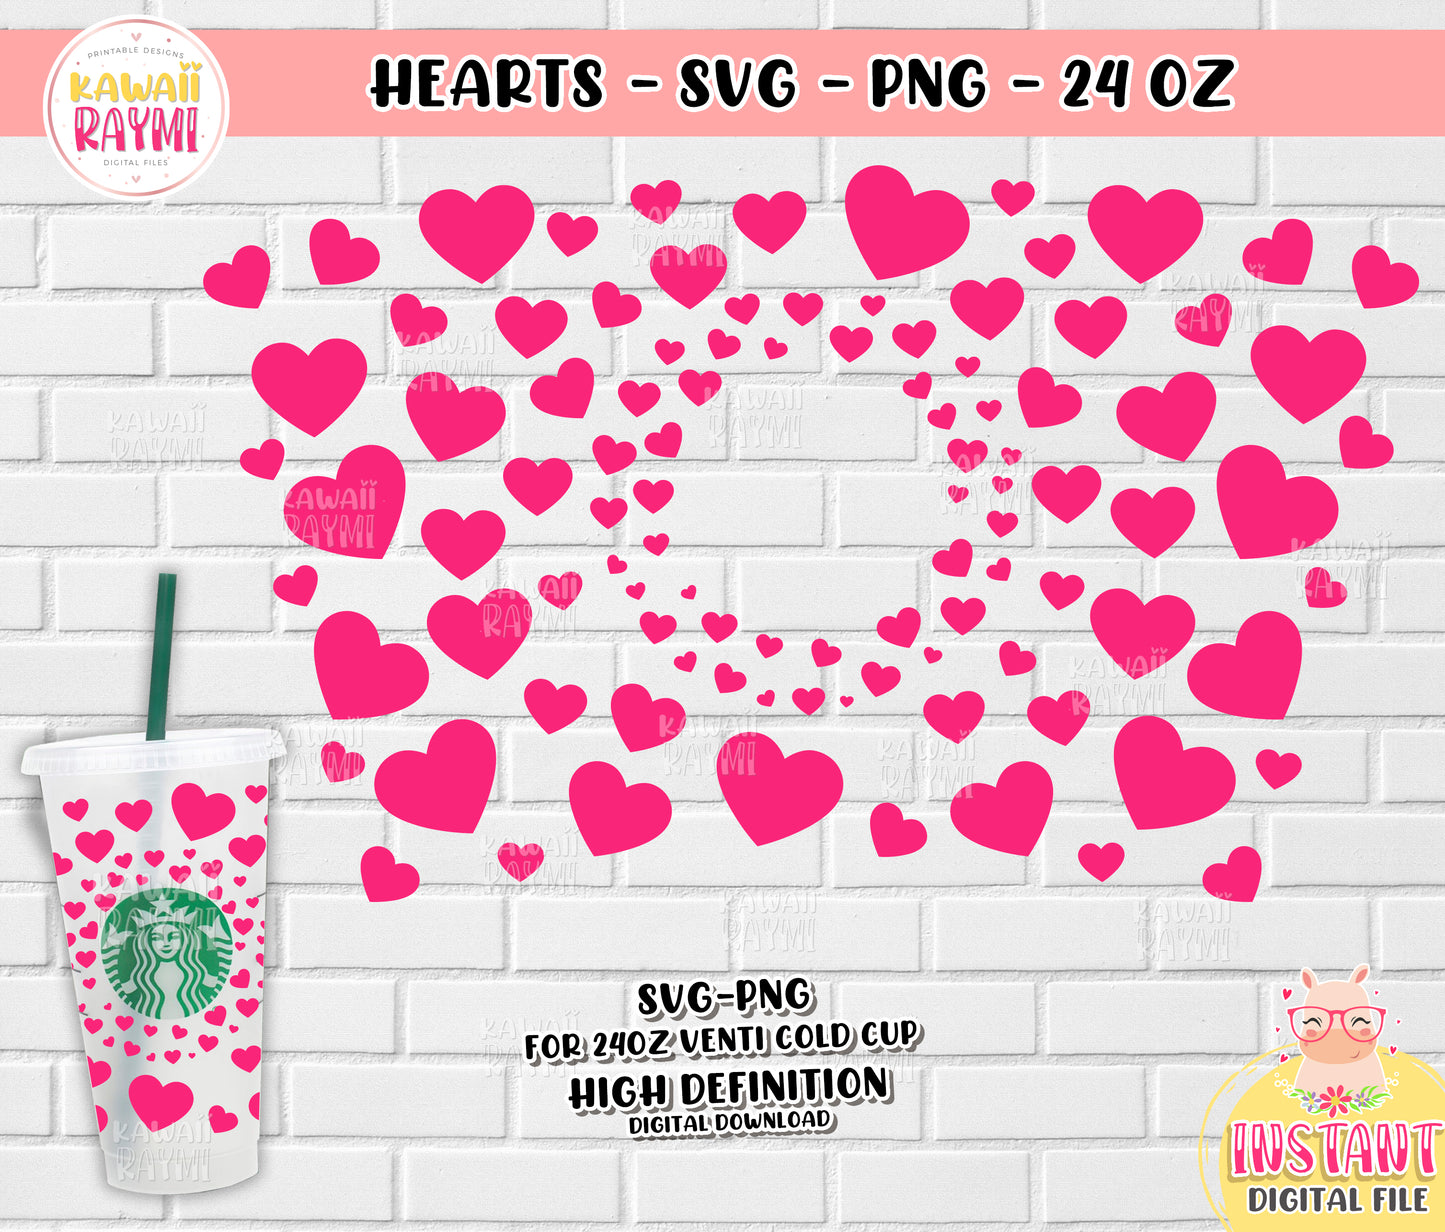 Starbucks Hearts template for Venti Cold Cup 24 oz, instant download, valentine hearts svg